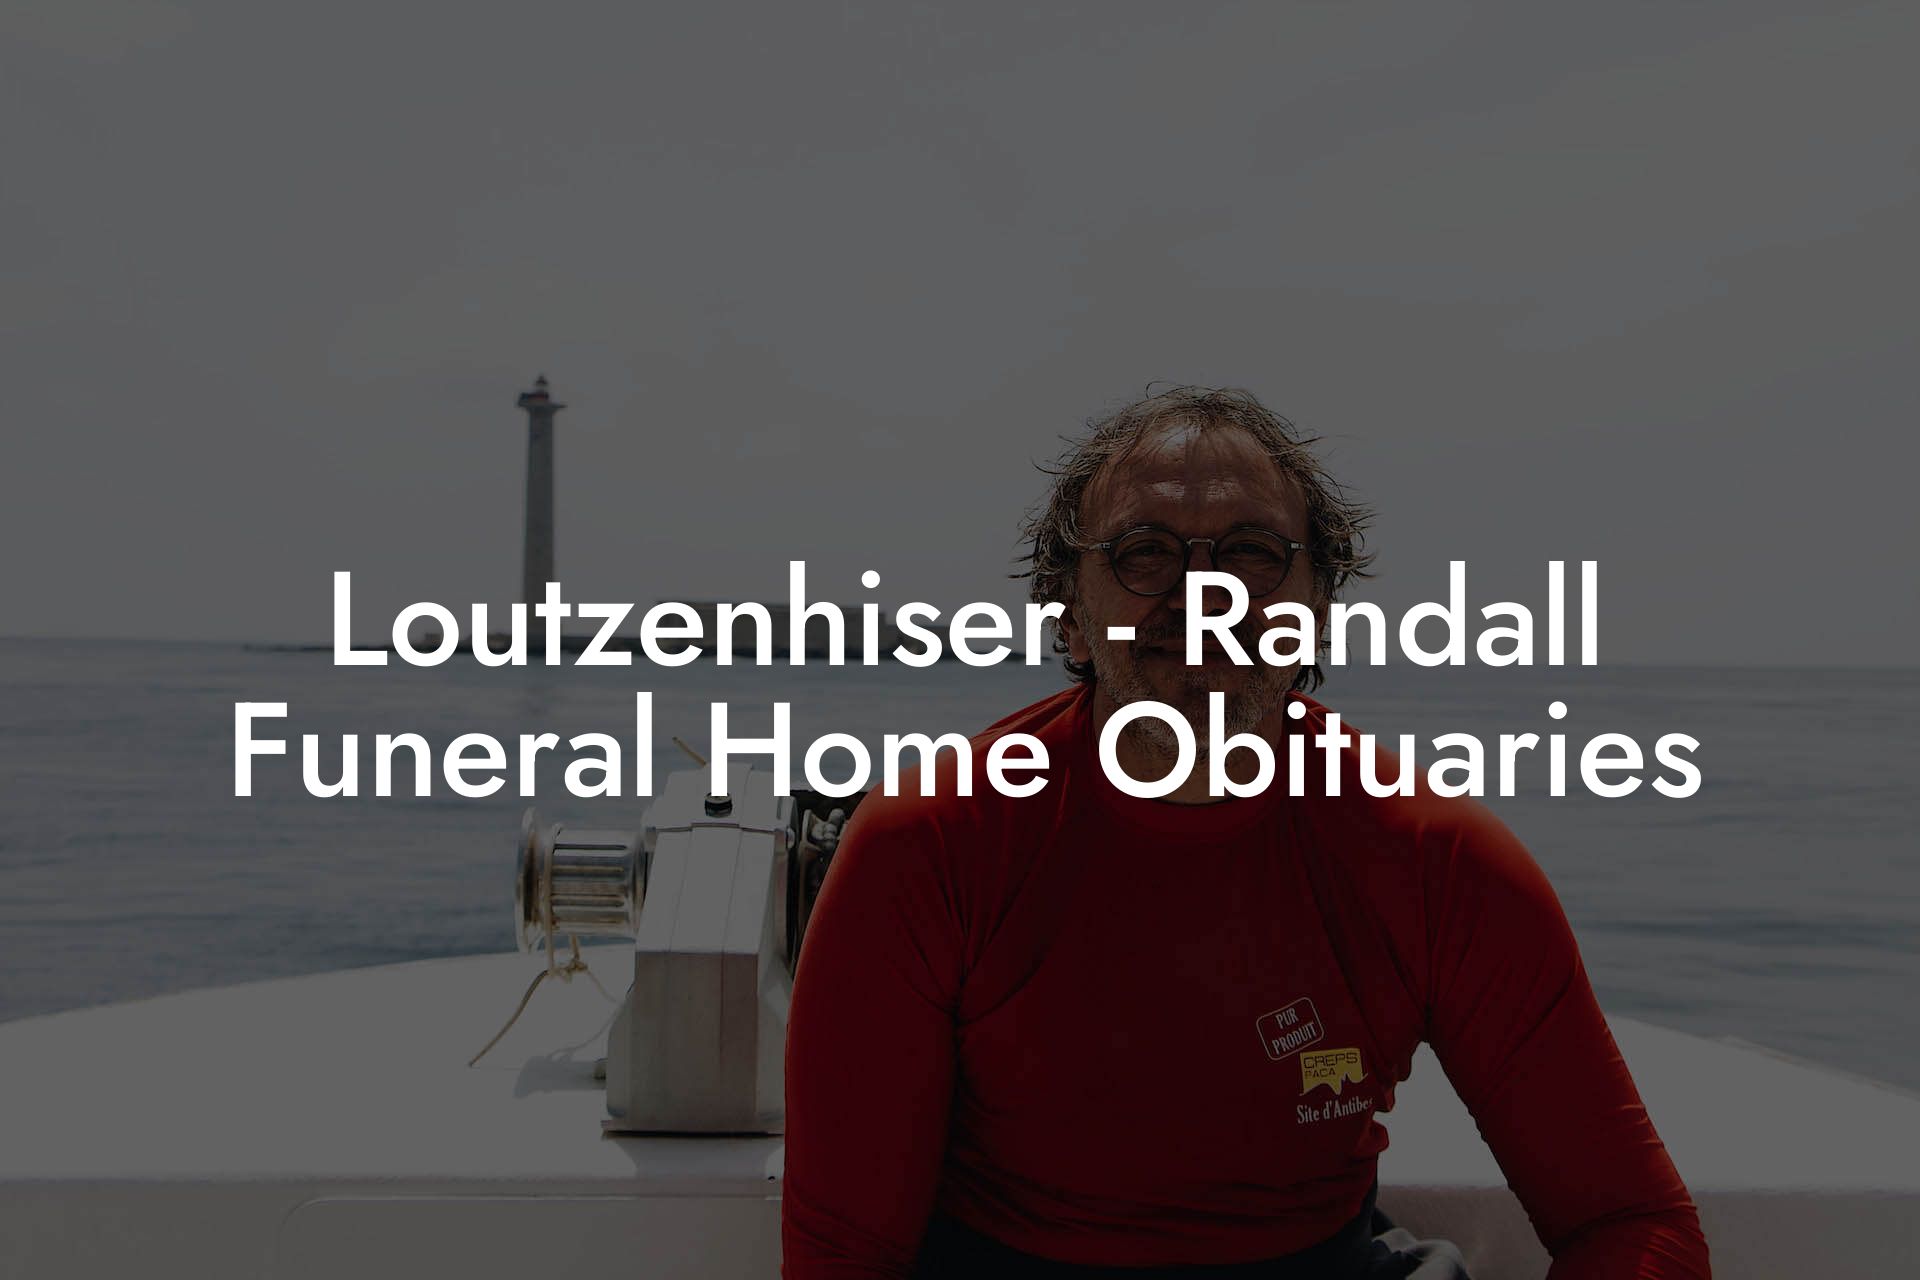 Loutzenhiser - Randall Funeral Home Obituaries